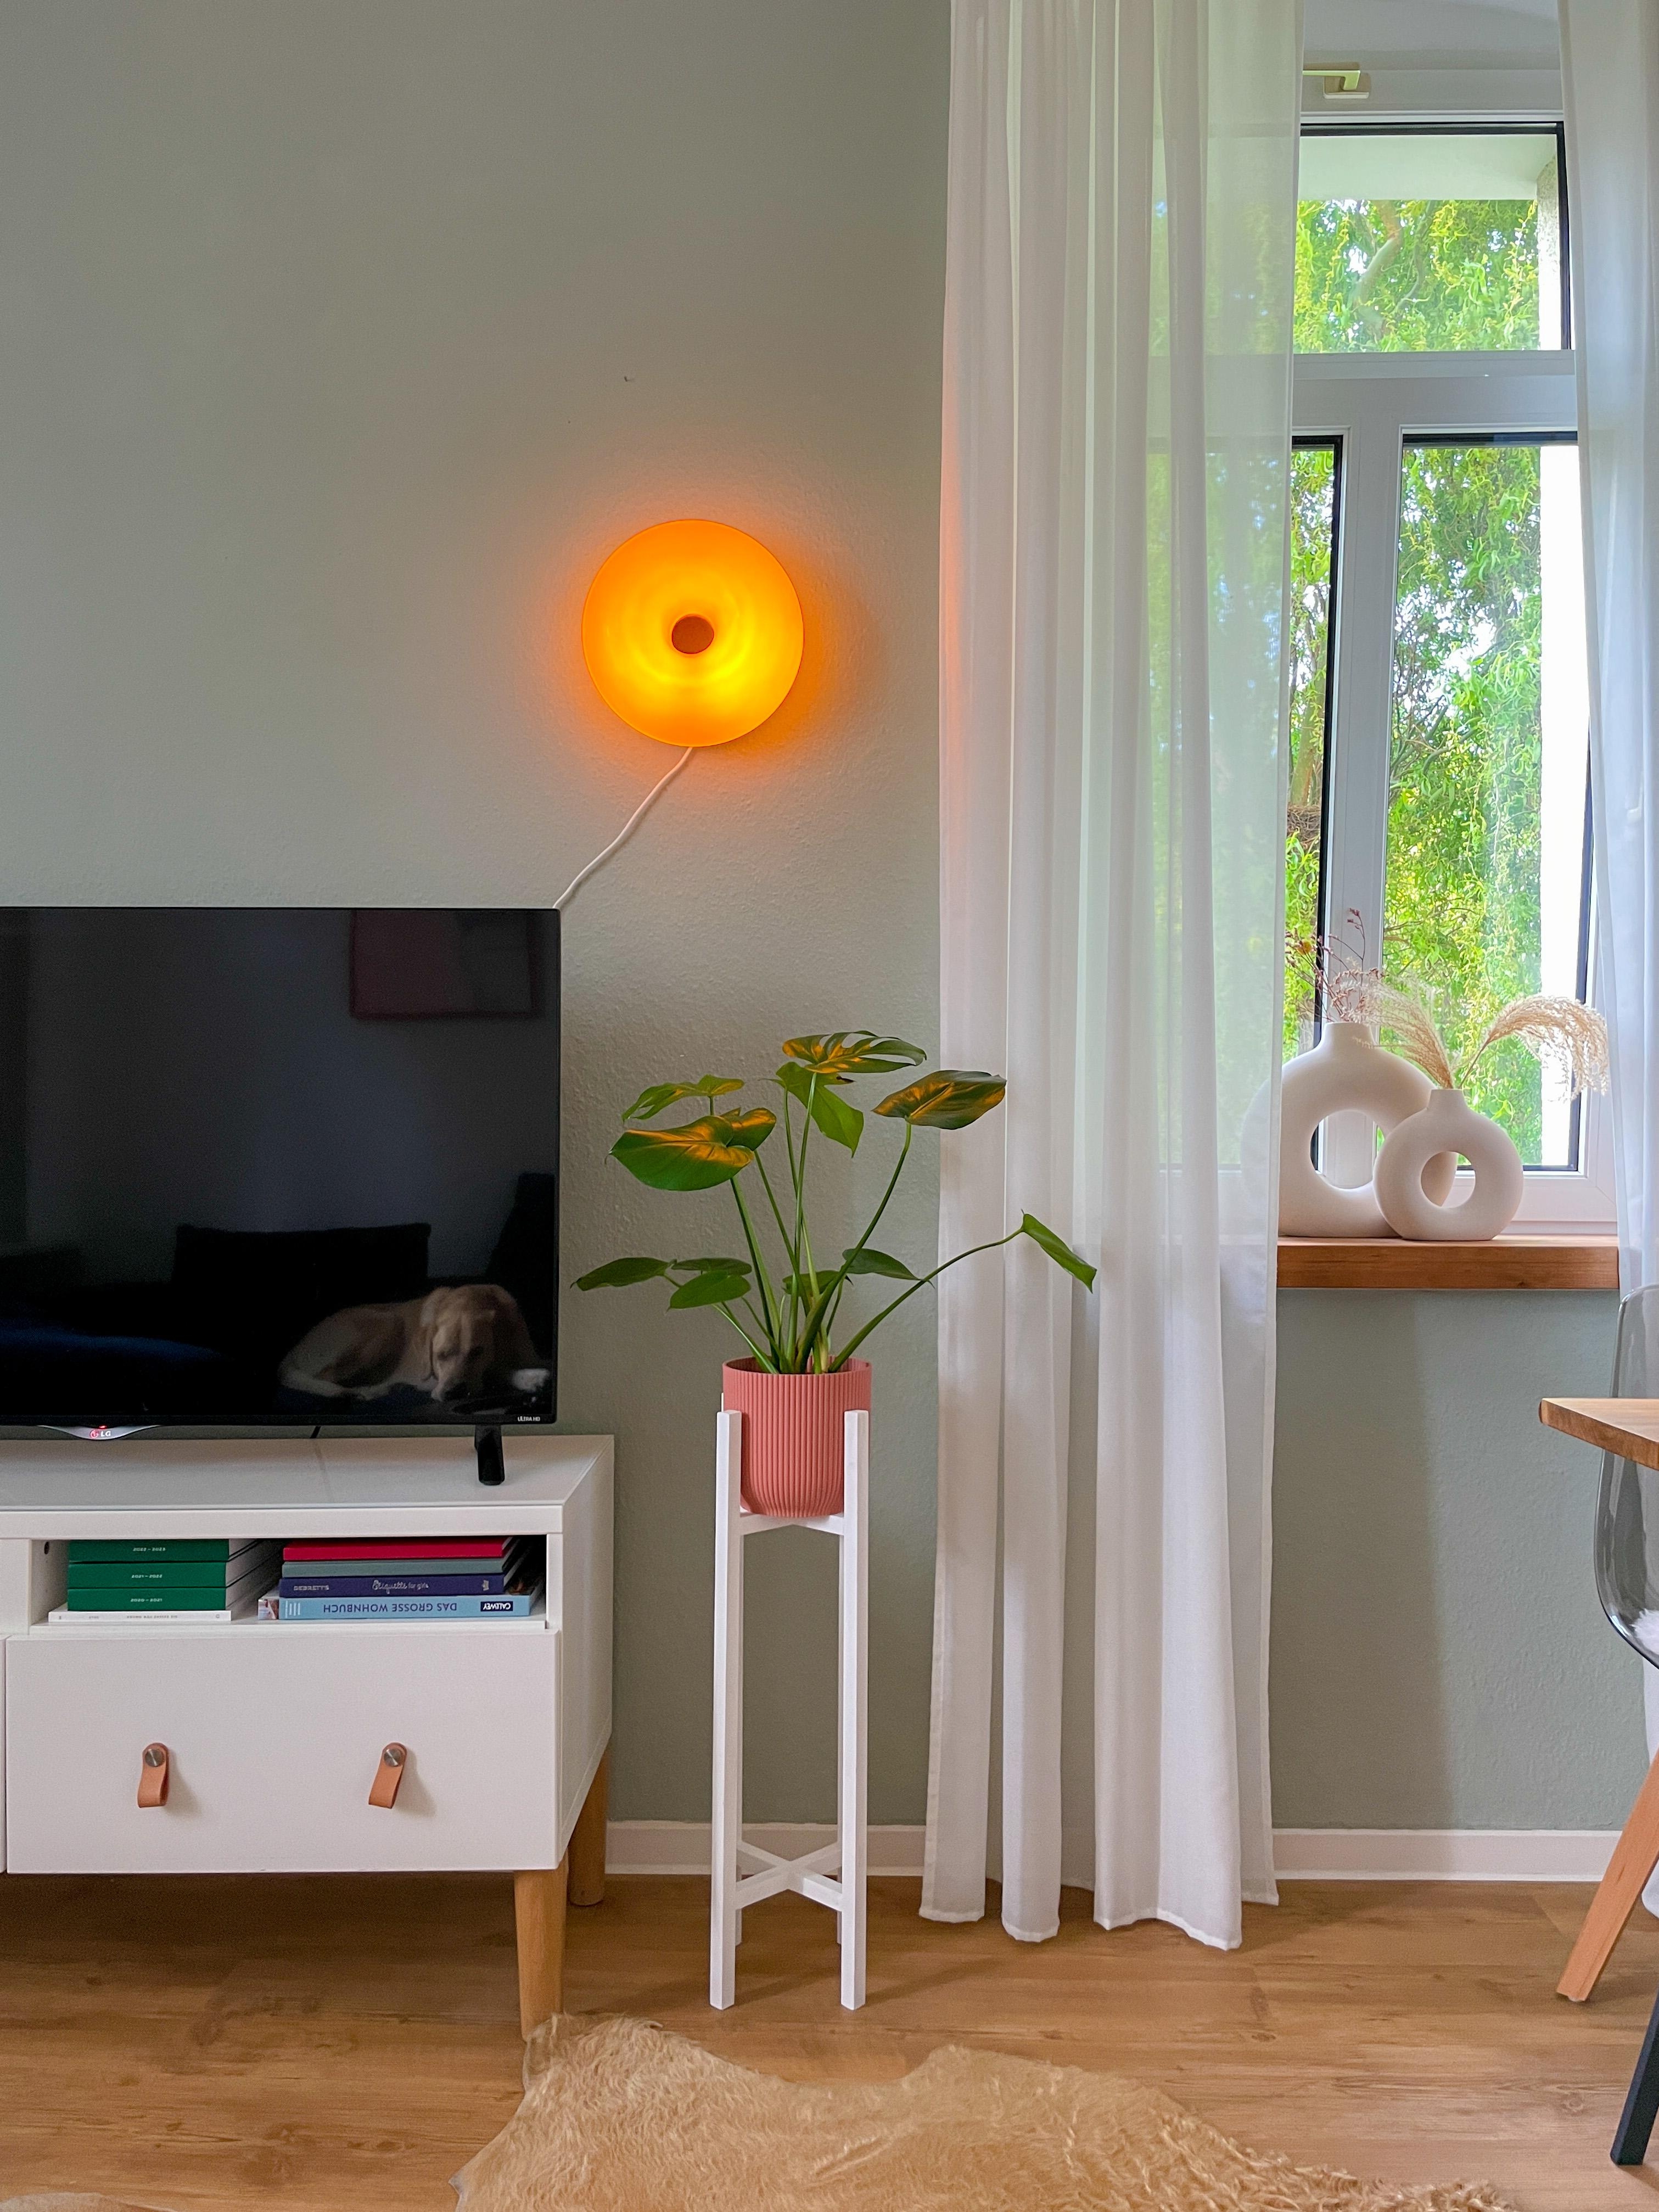 #light #orange #livingroom #cozy